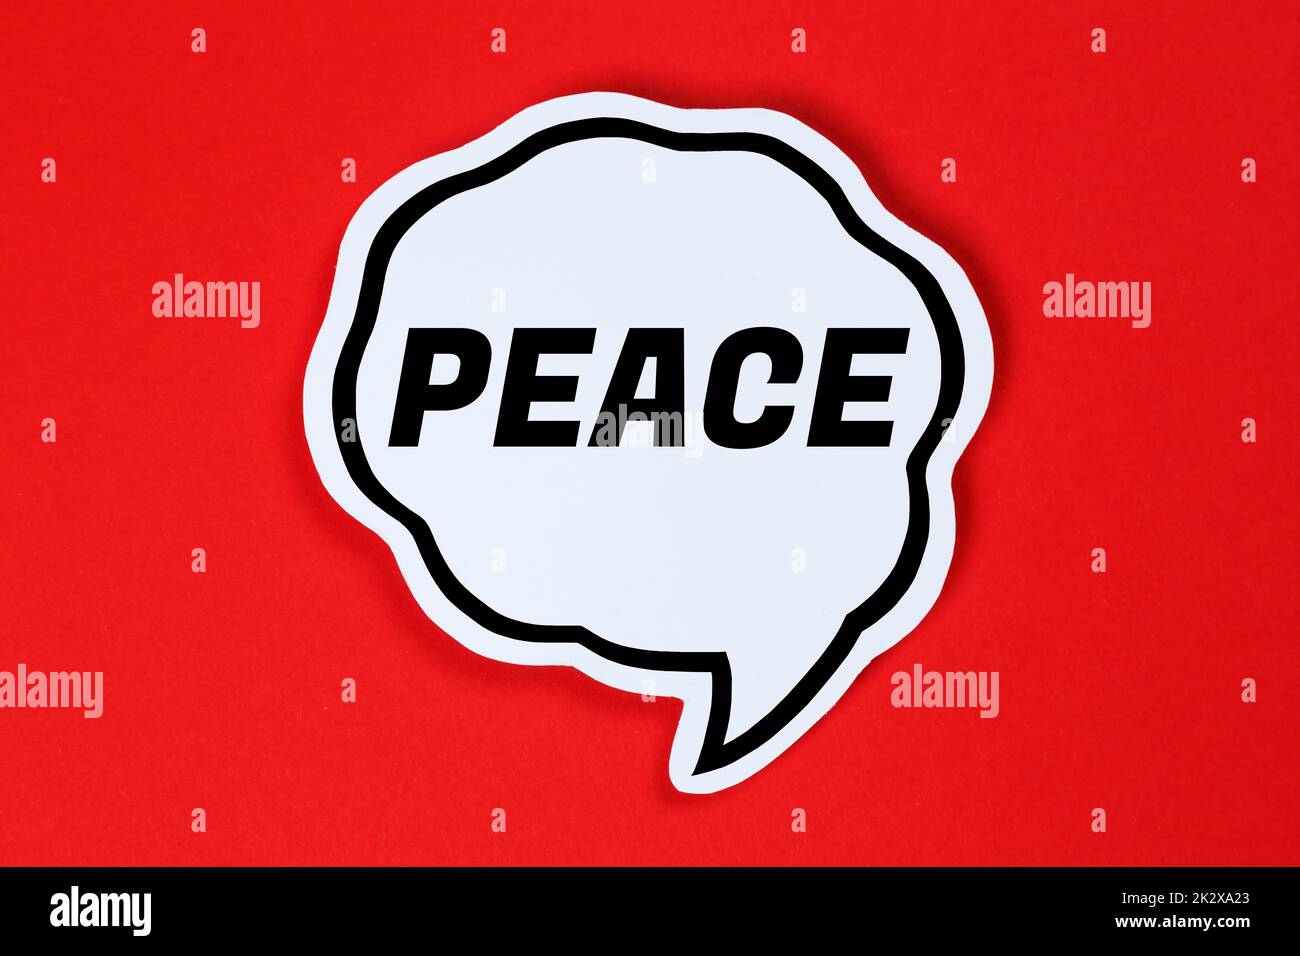 Peace speech bubble communication concept talking saying Stock Photo